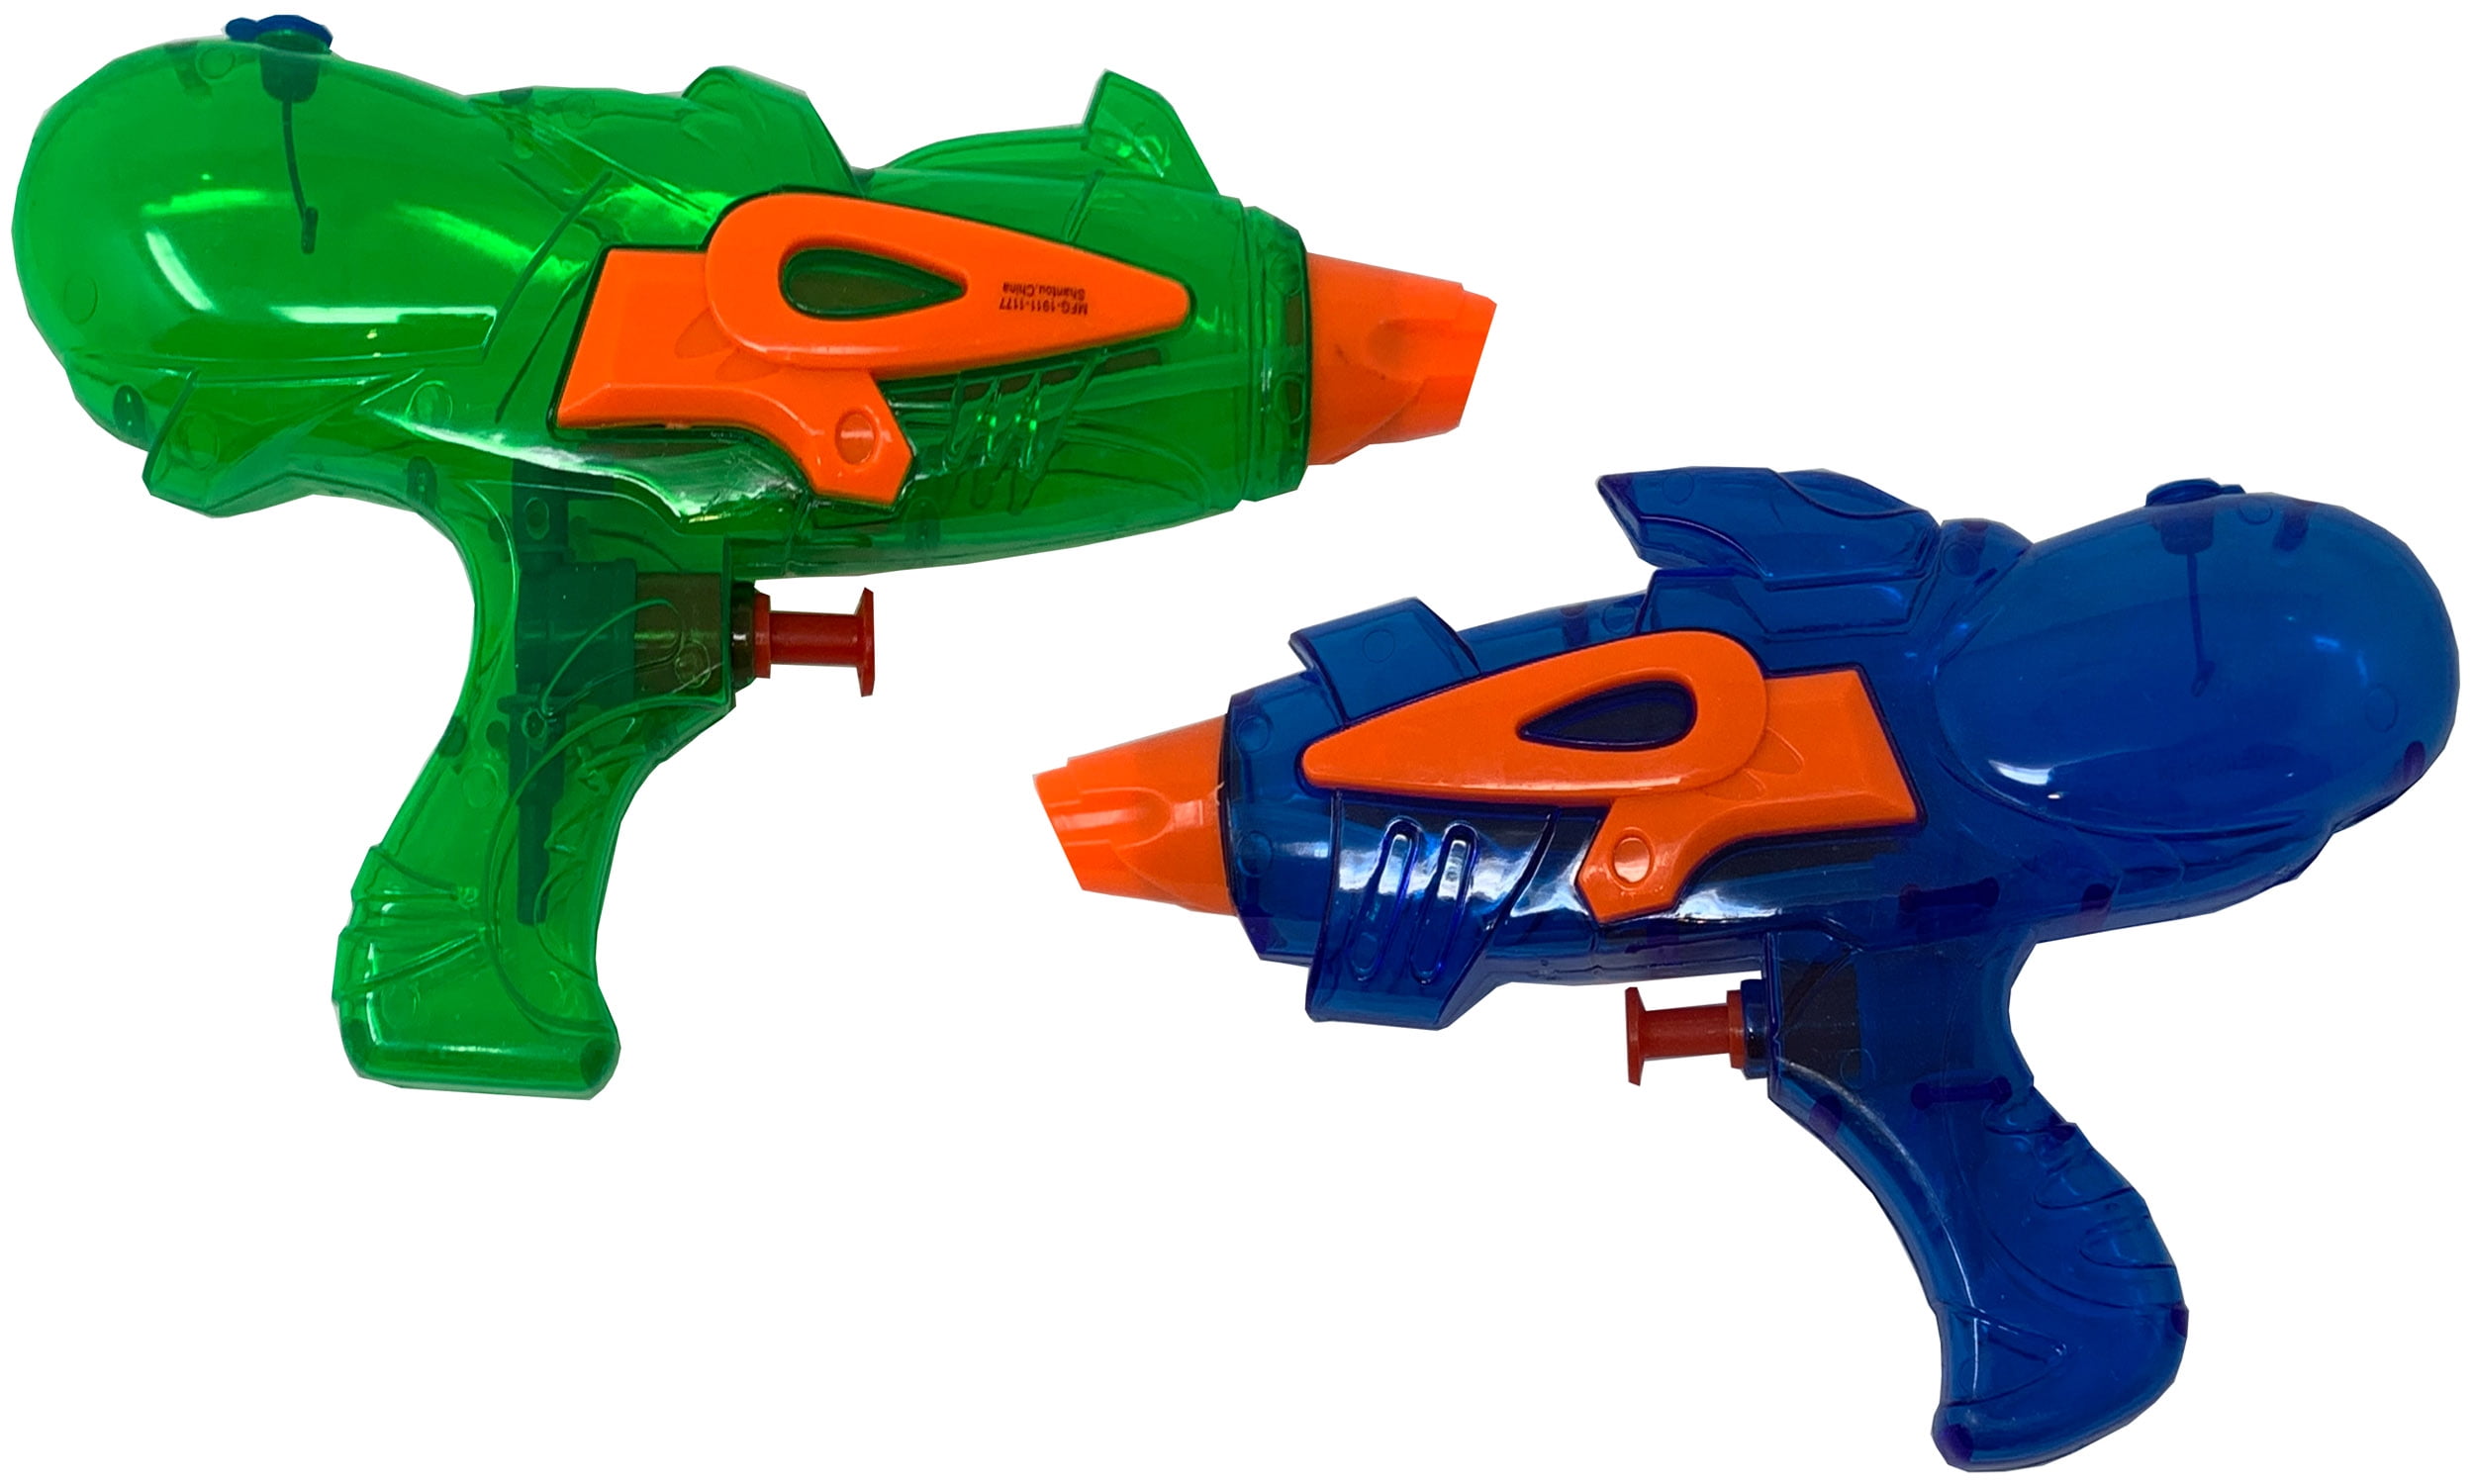 2 TANK WATER SQUIRT GUNS 5 INCH squirting toy gun 